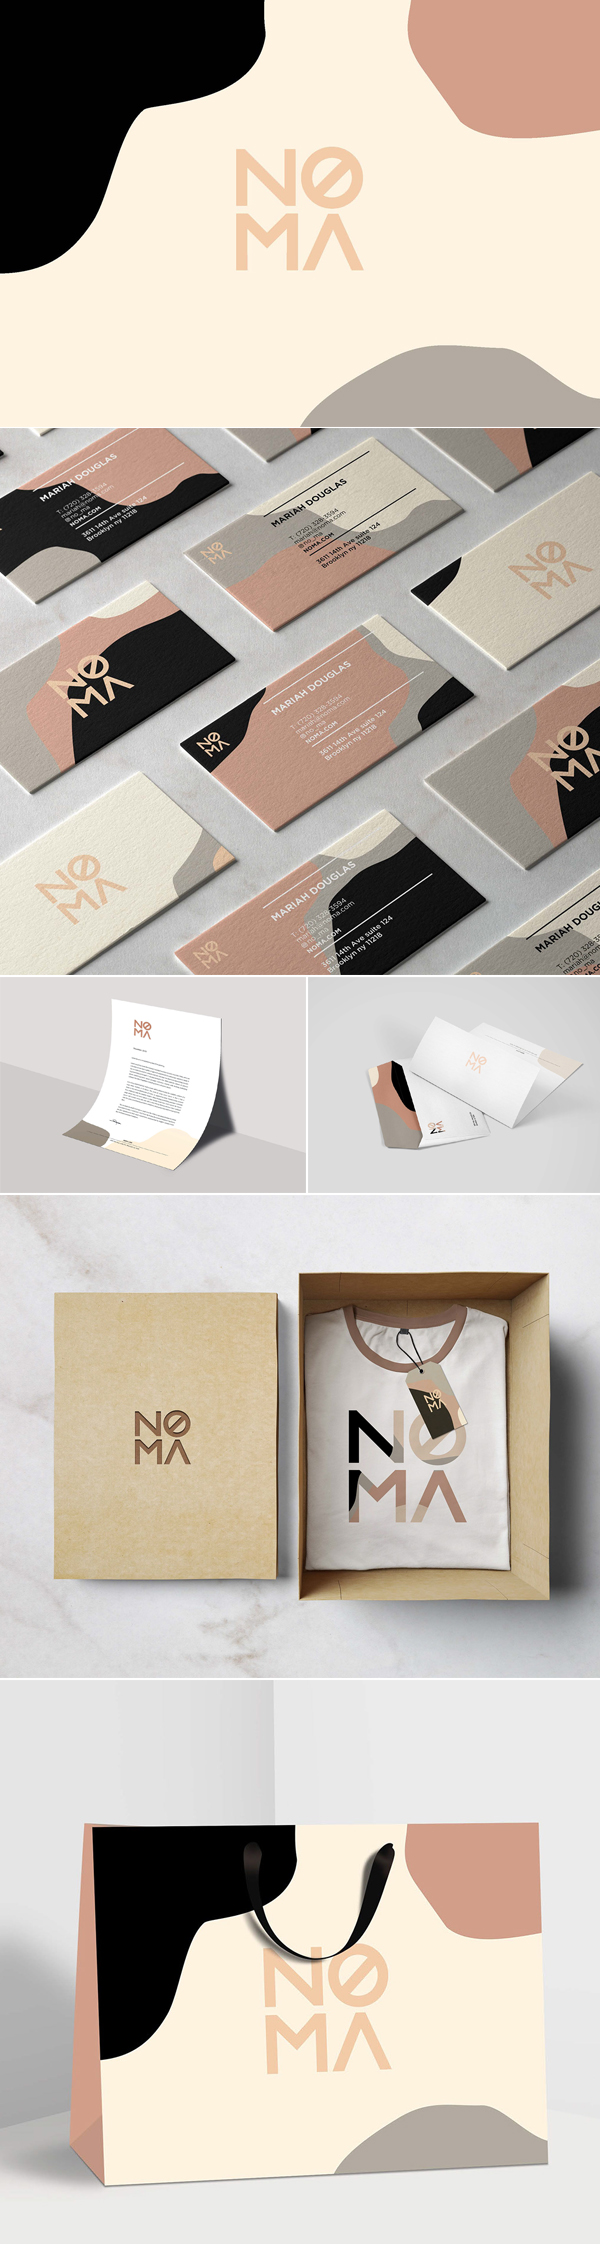 Noma Packaging Branding by Shane Wilson